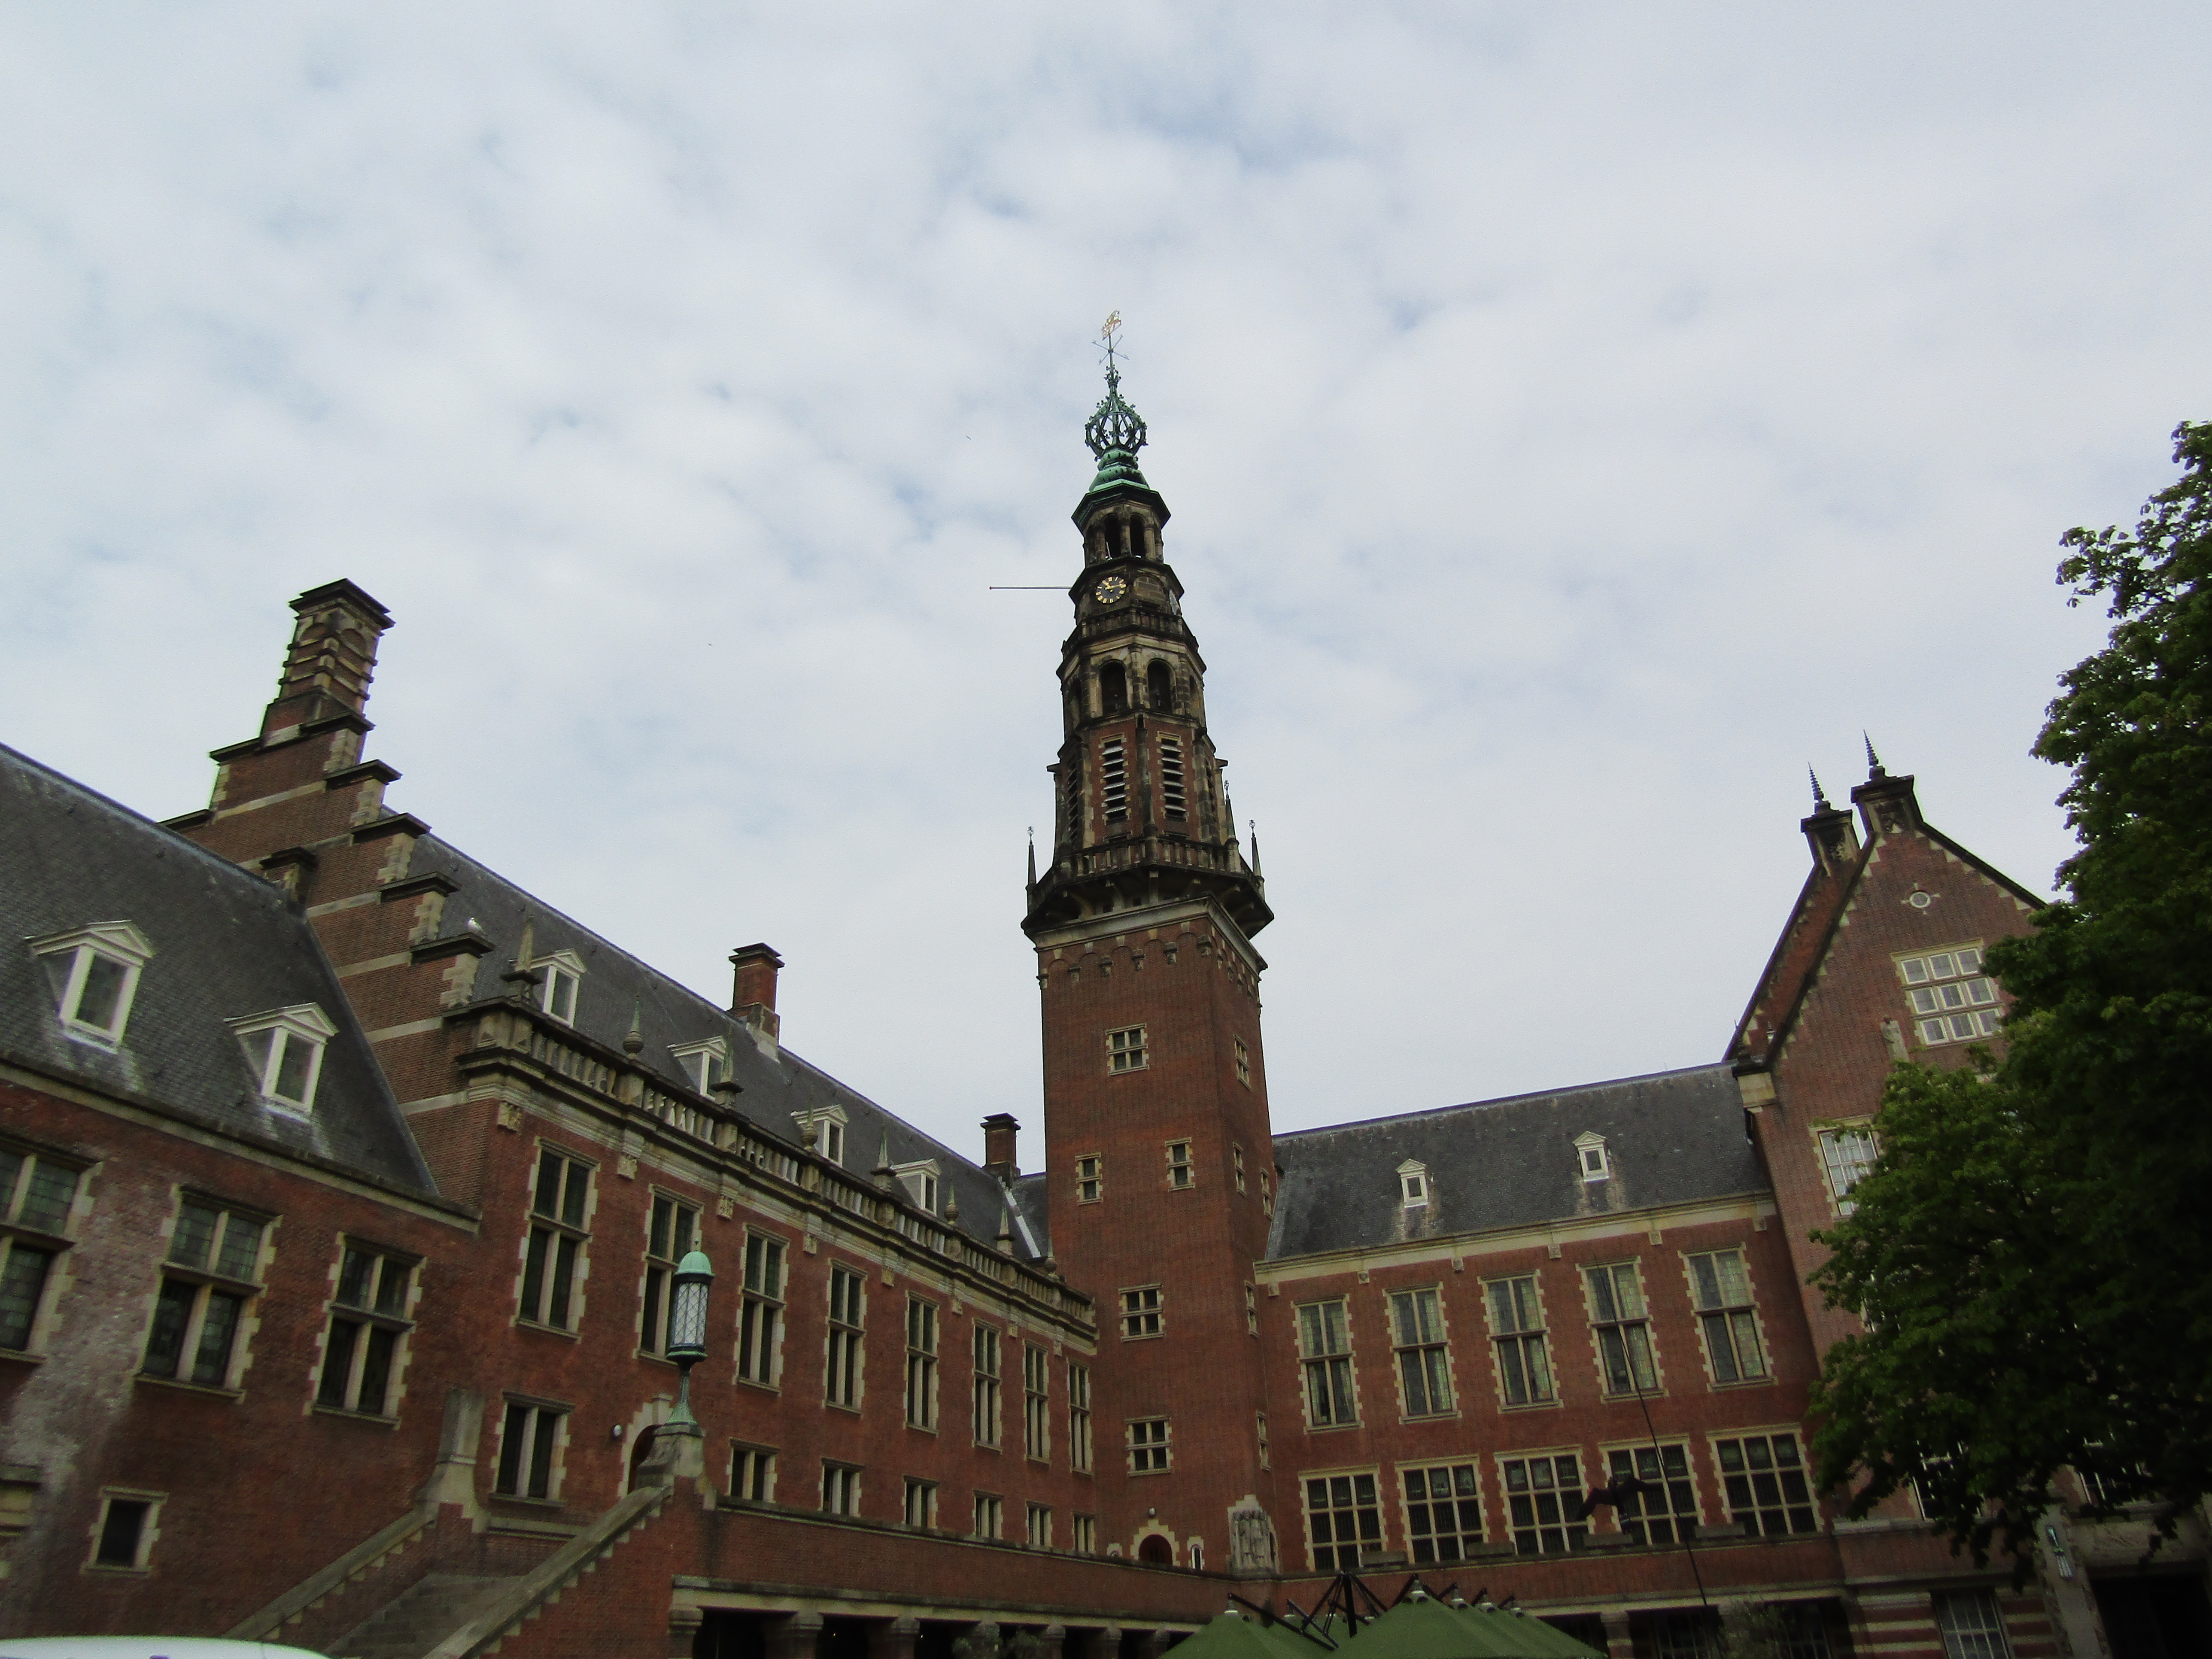 Stadhuis Town Hall, Leiden, July 2019